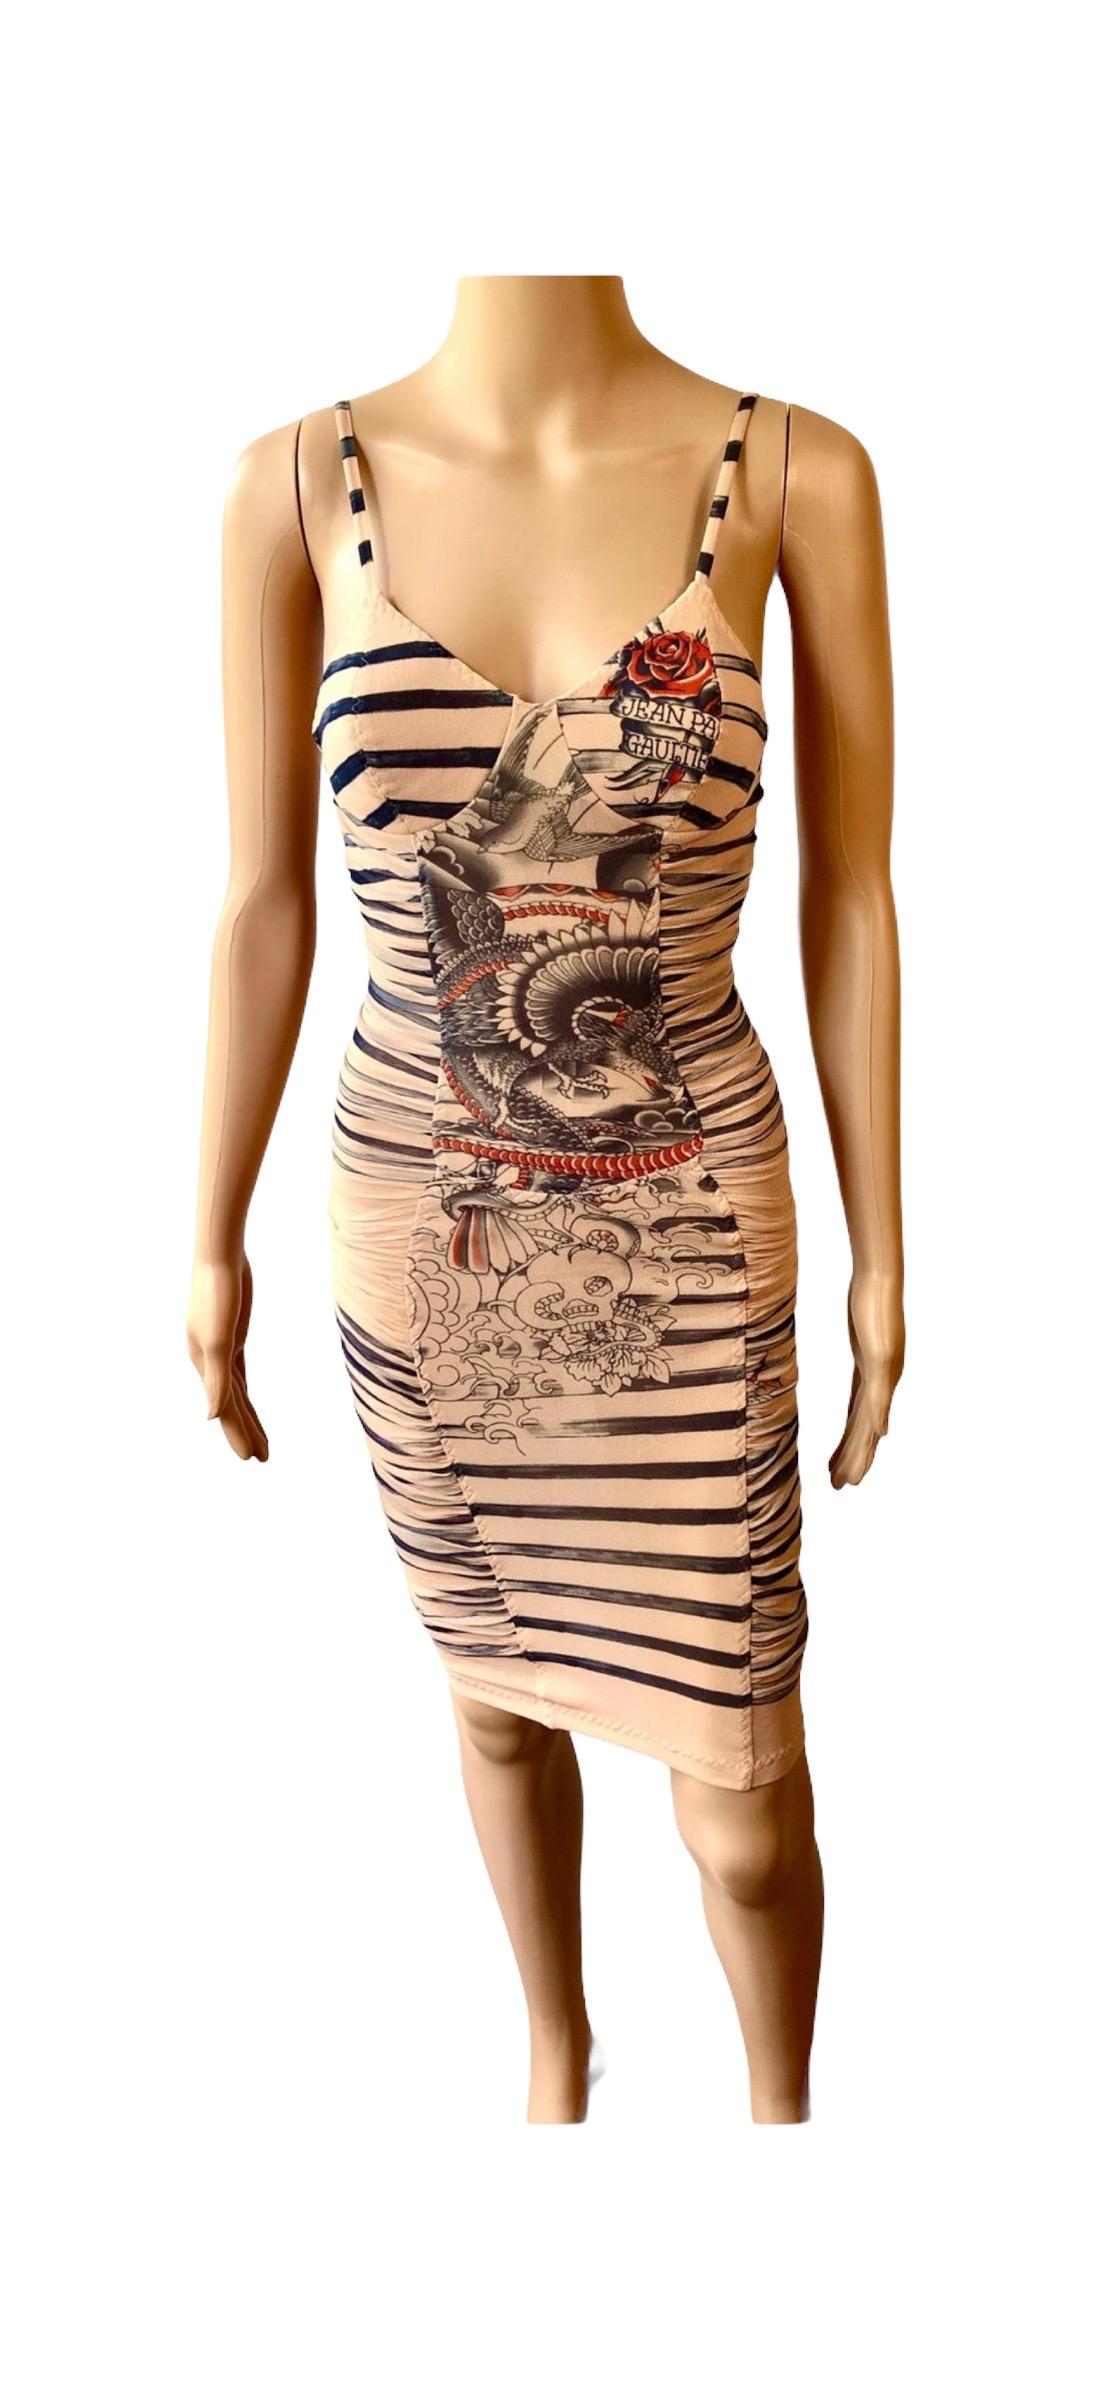 Jean Paul Gaultier Soleil S/S 2012 Tattoo Print Semi-Sheer Mesh Bodycon Dress 4